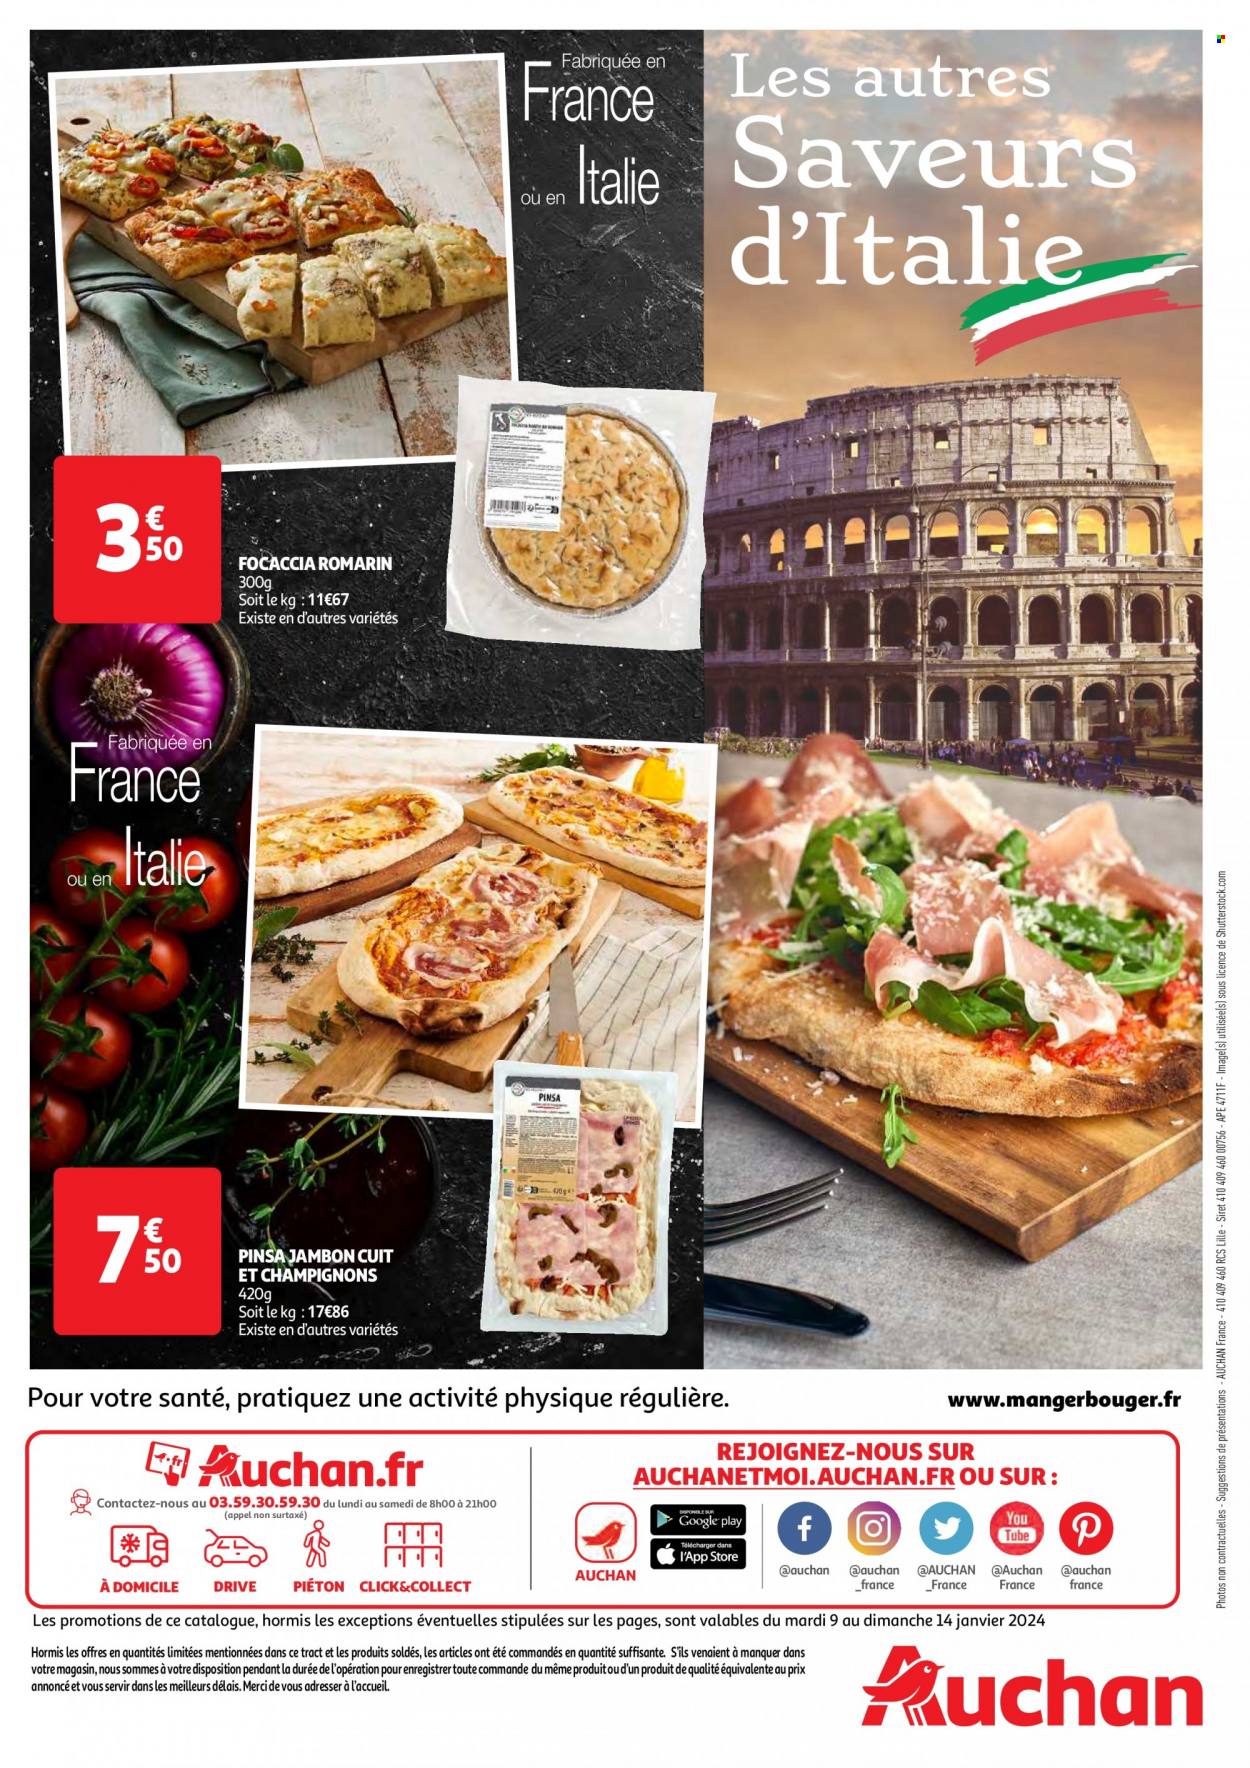 Catalogue Auchan - 09.01.2024 - 14.01.2024. 